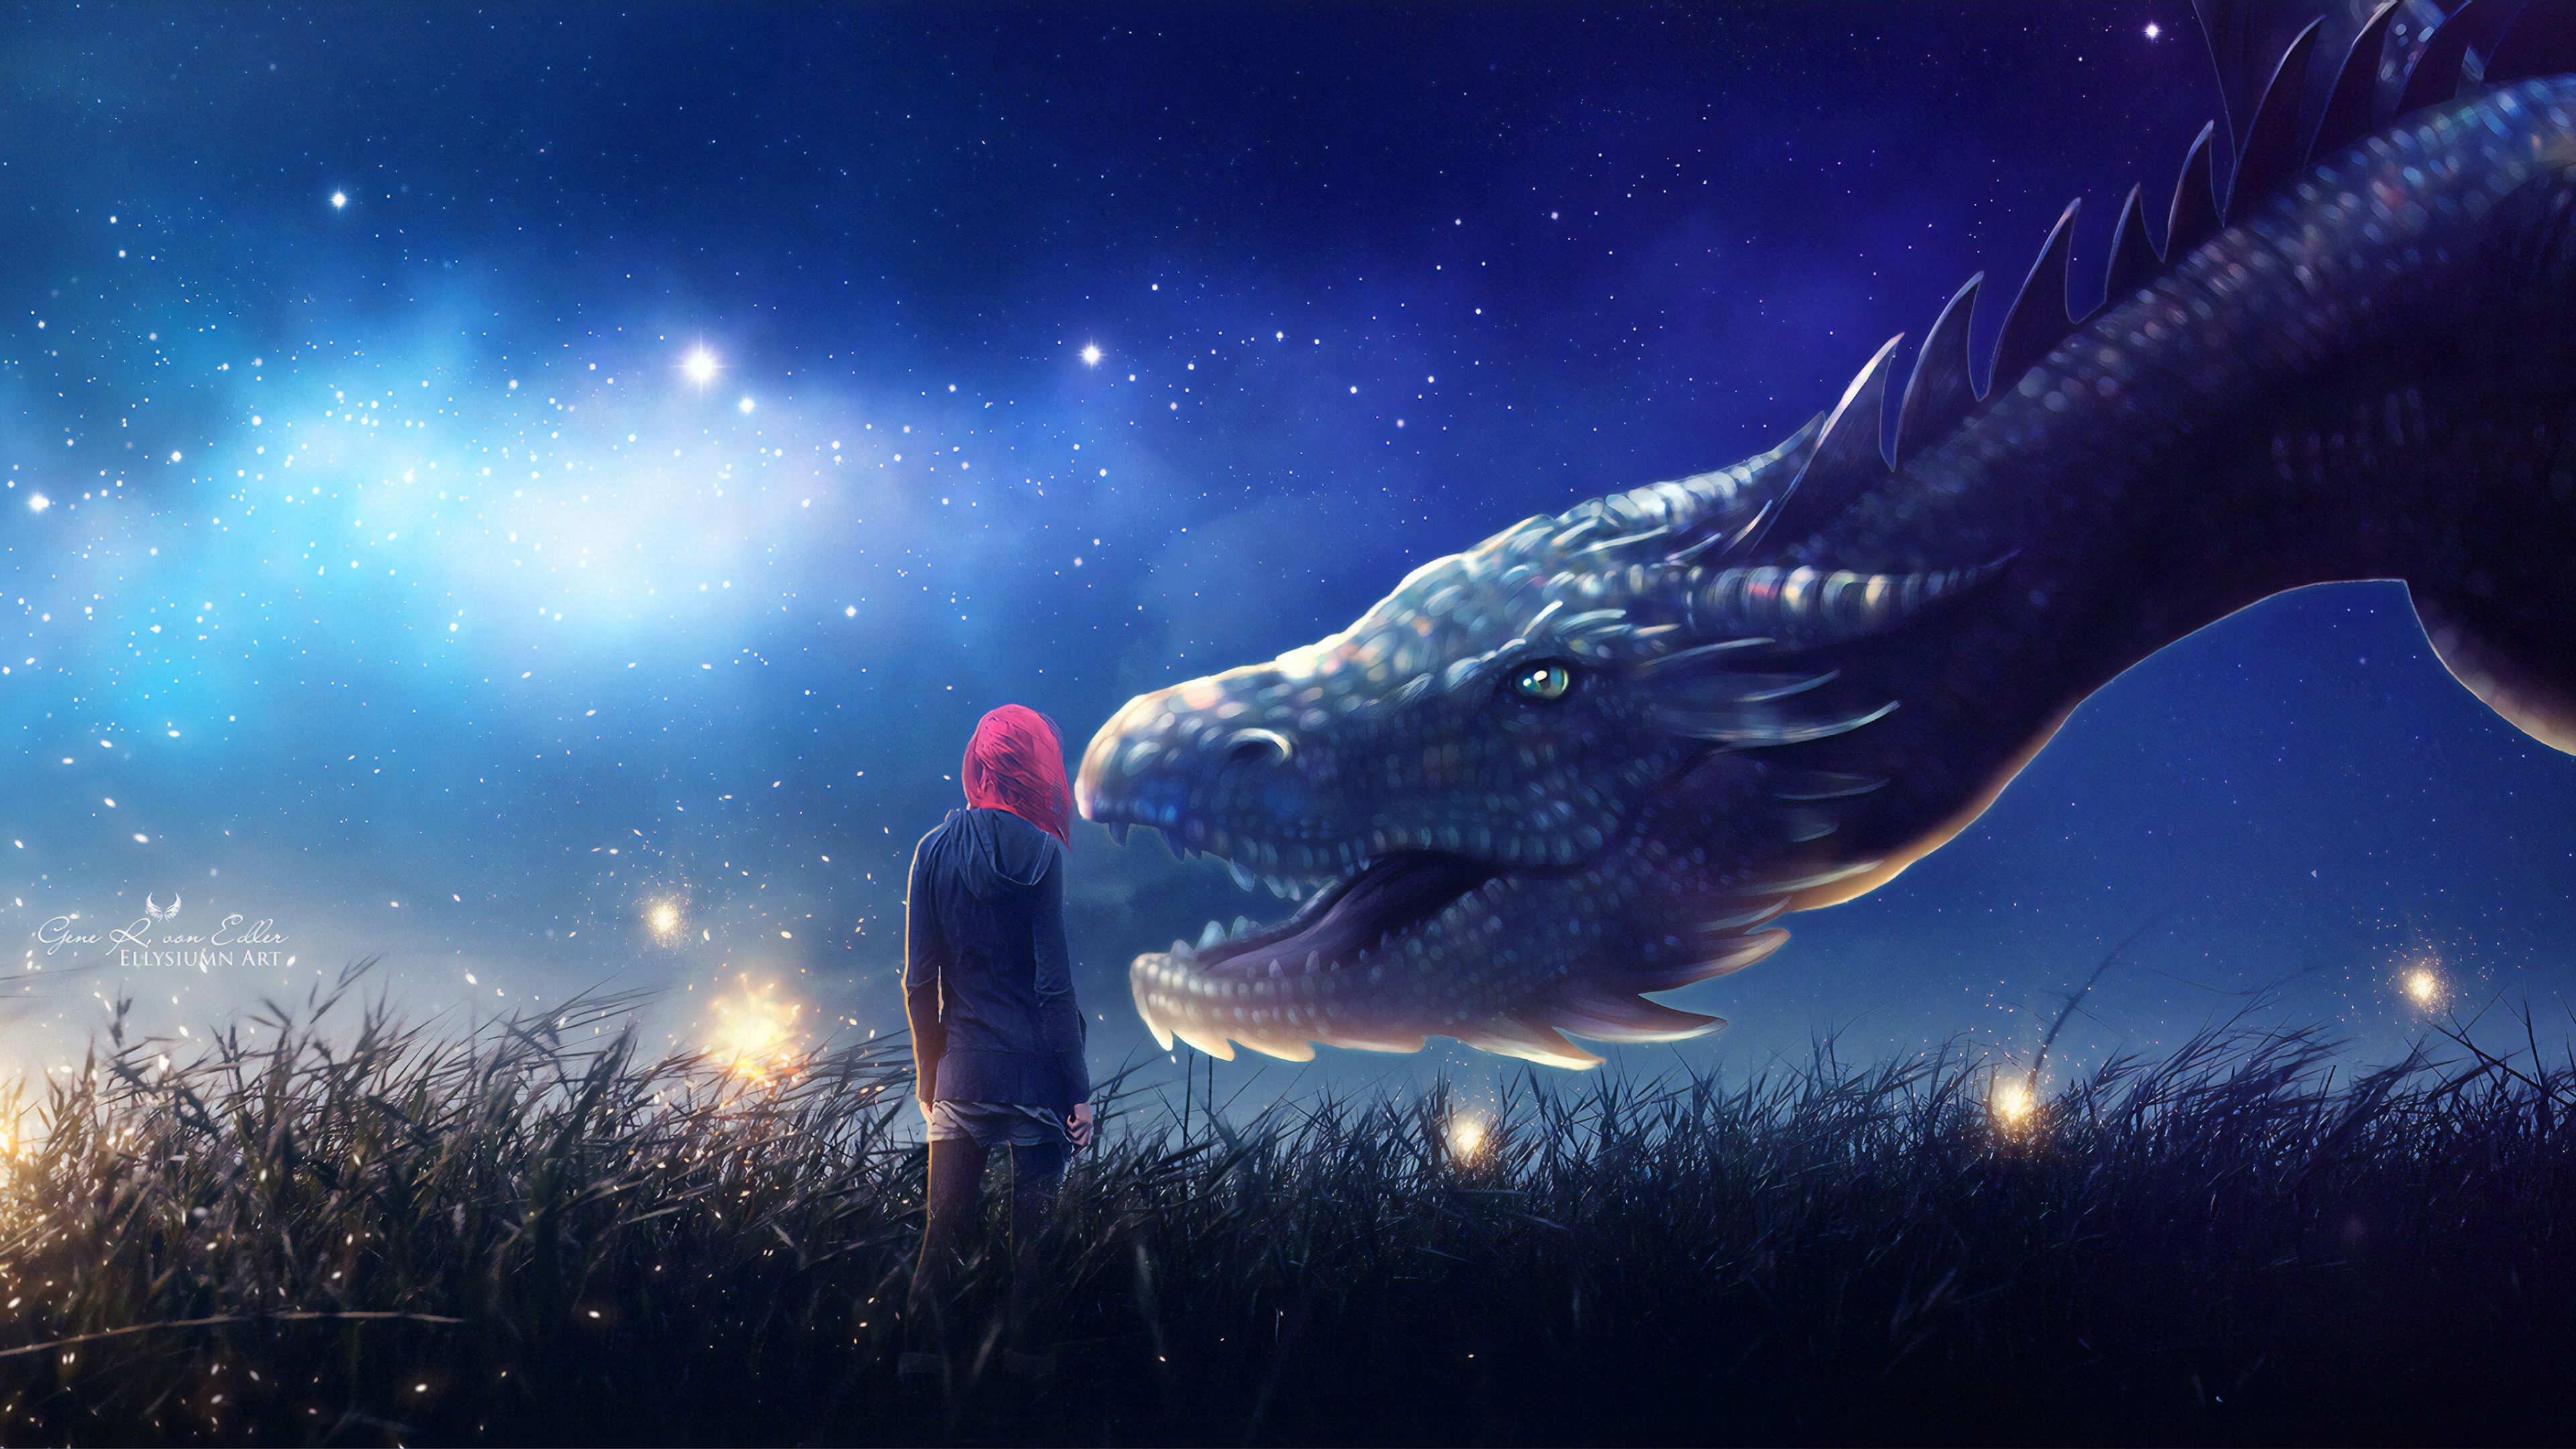 Fantasy Girl With Dragon 4K Wallpaper, HD Fantasy 4K Wallpaper, Image, Photo and Background